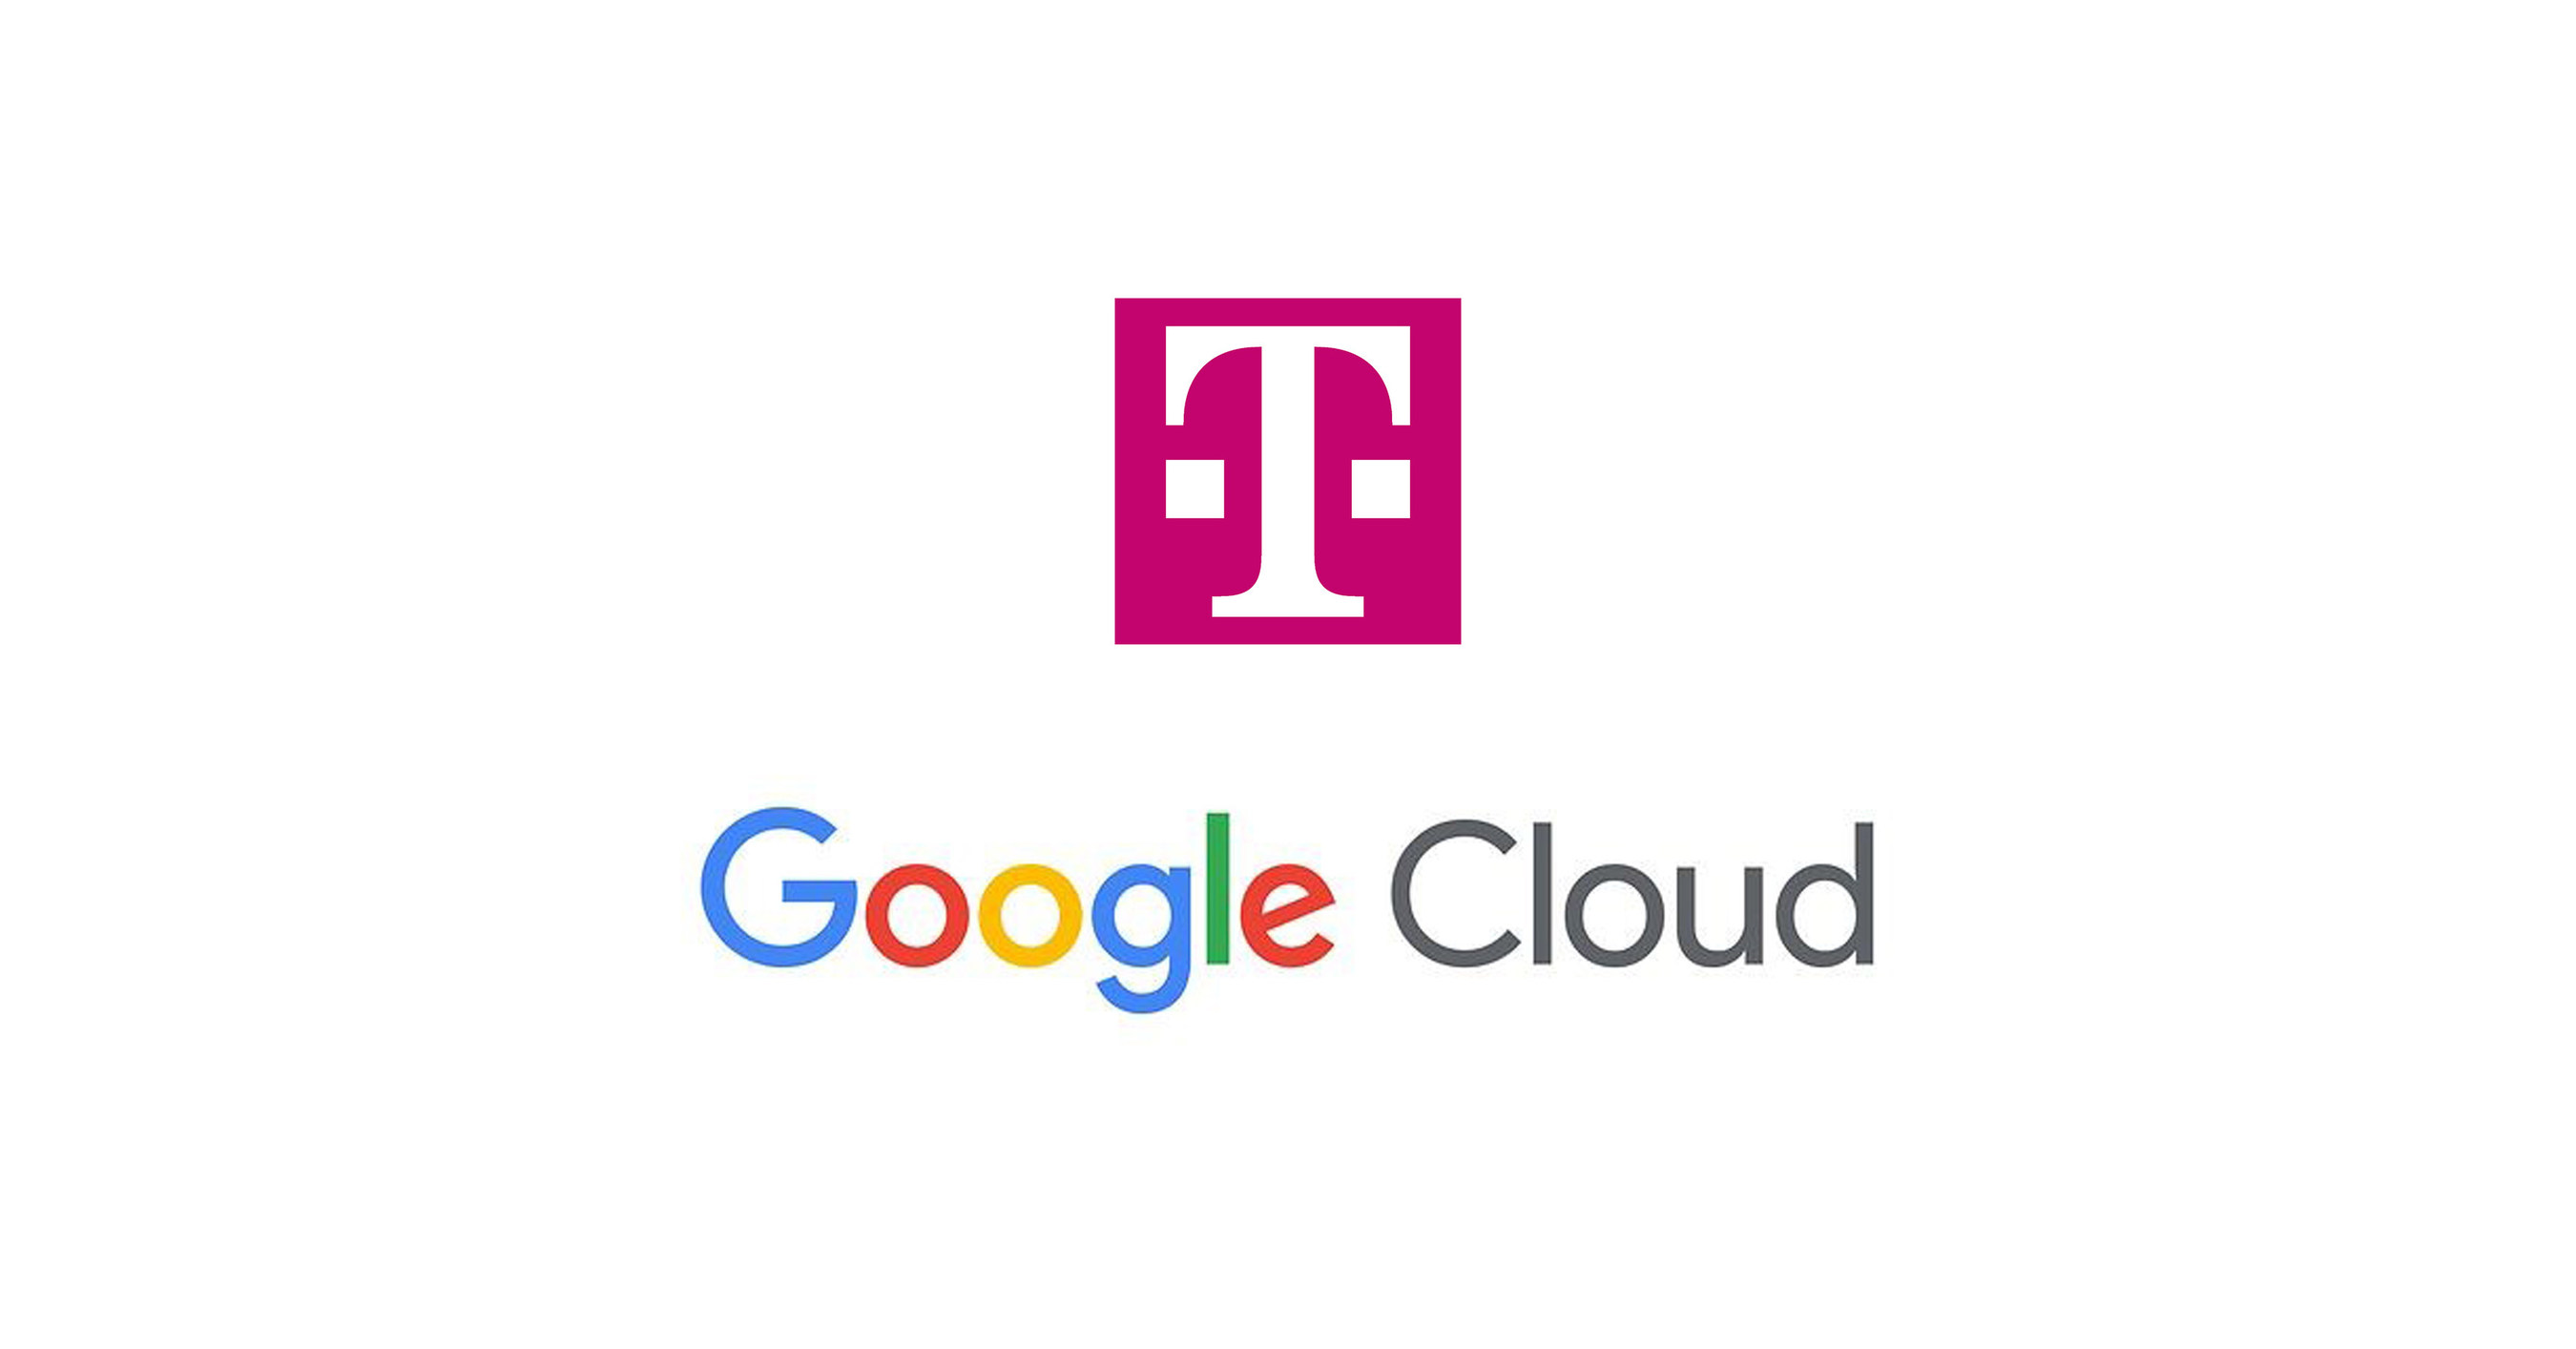 Deutsche Telekom and Google Cloud Sign Partnership Agreement Focused on Network Transformation